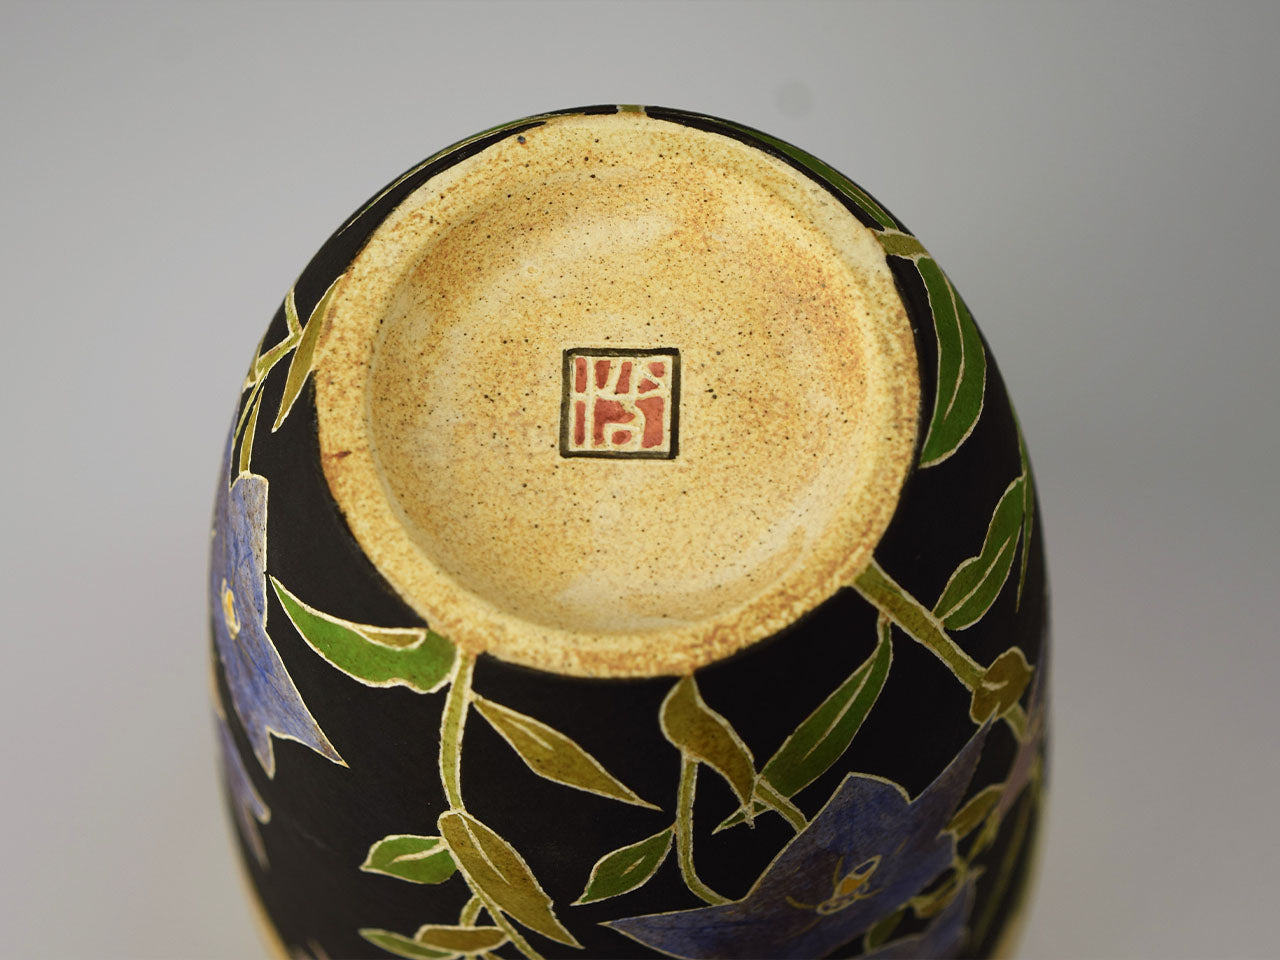 Flower vessel, Jar, Bellflower - Hiroyuki Onuki, Kasama ware, Ceramics